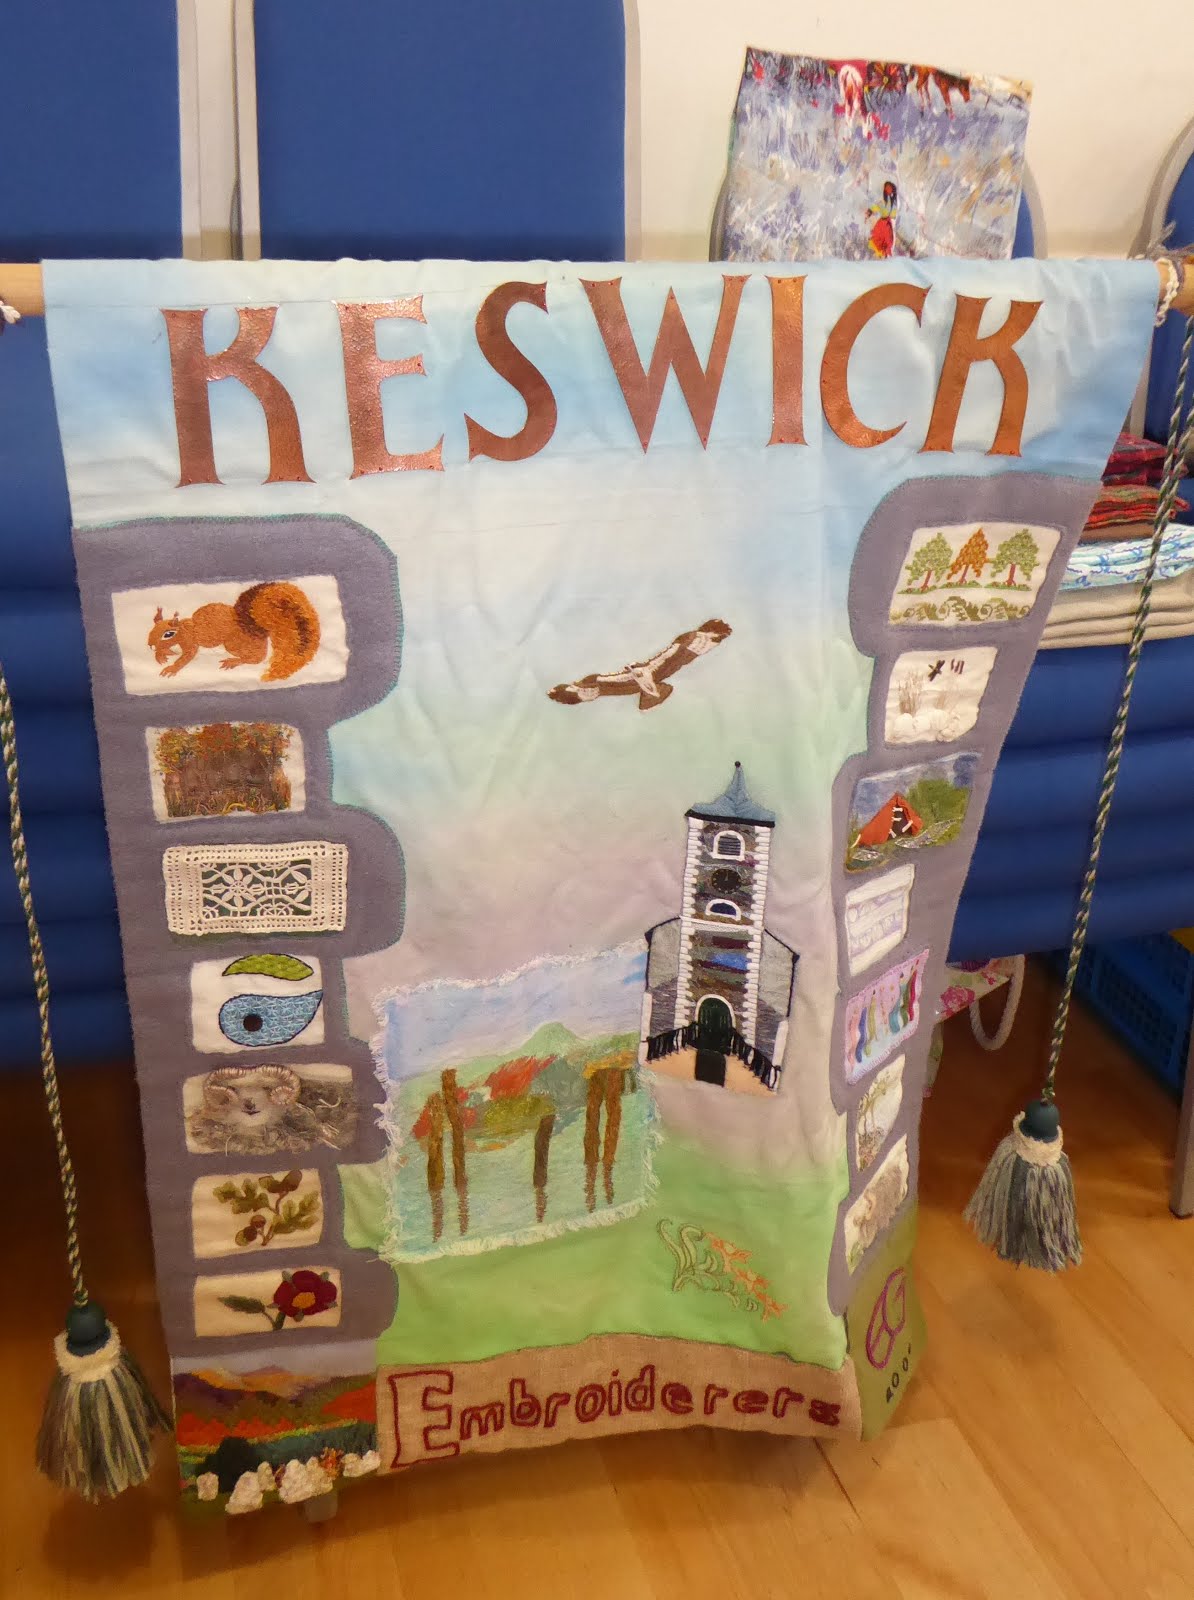 Keswick banner